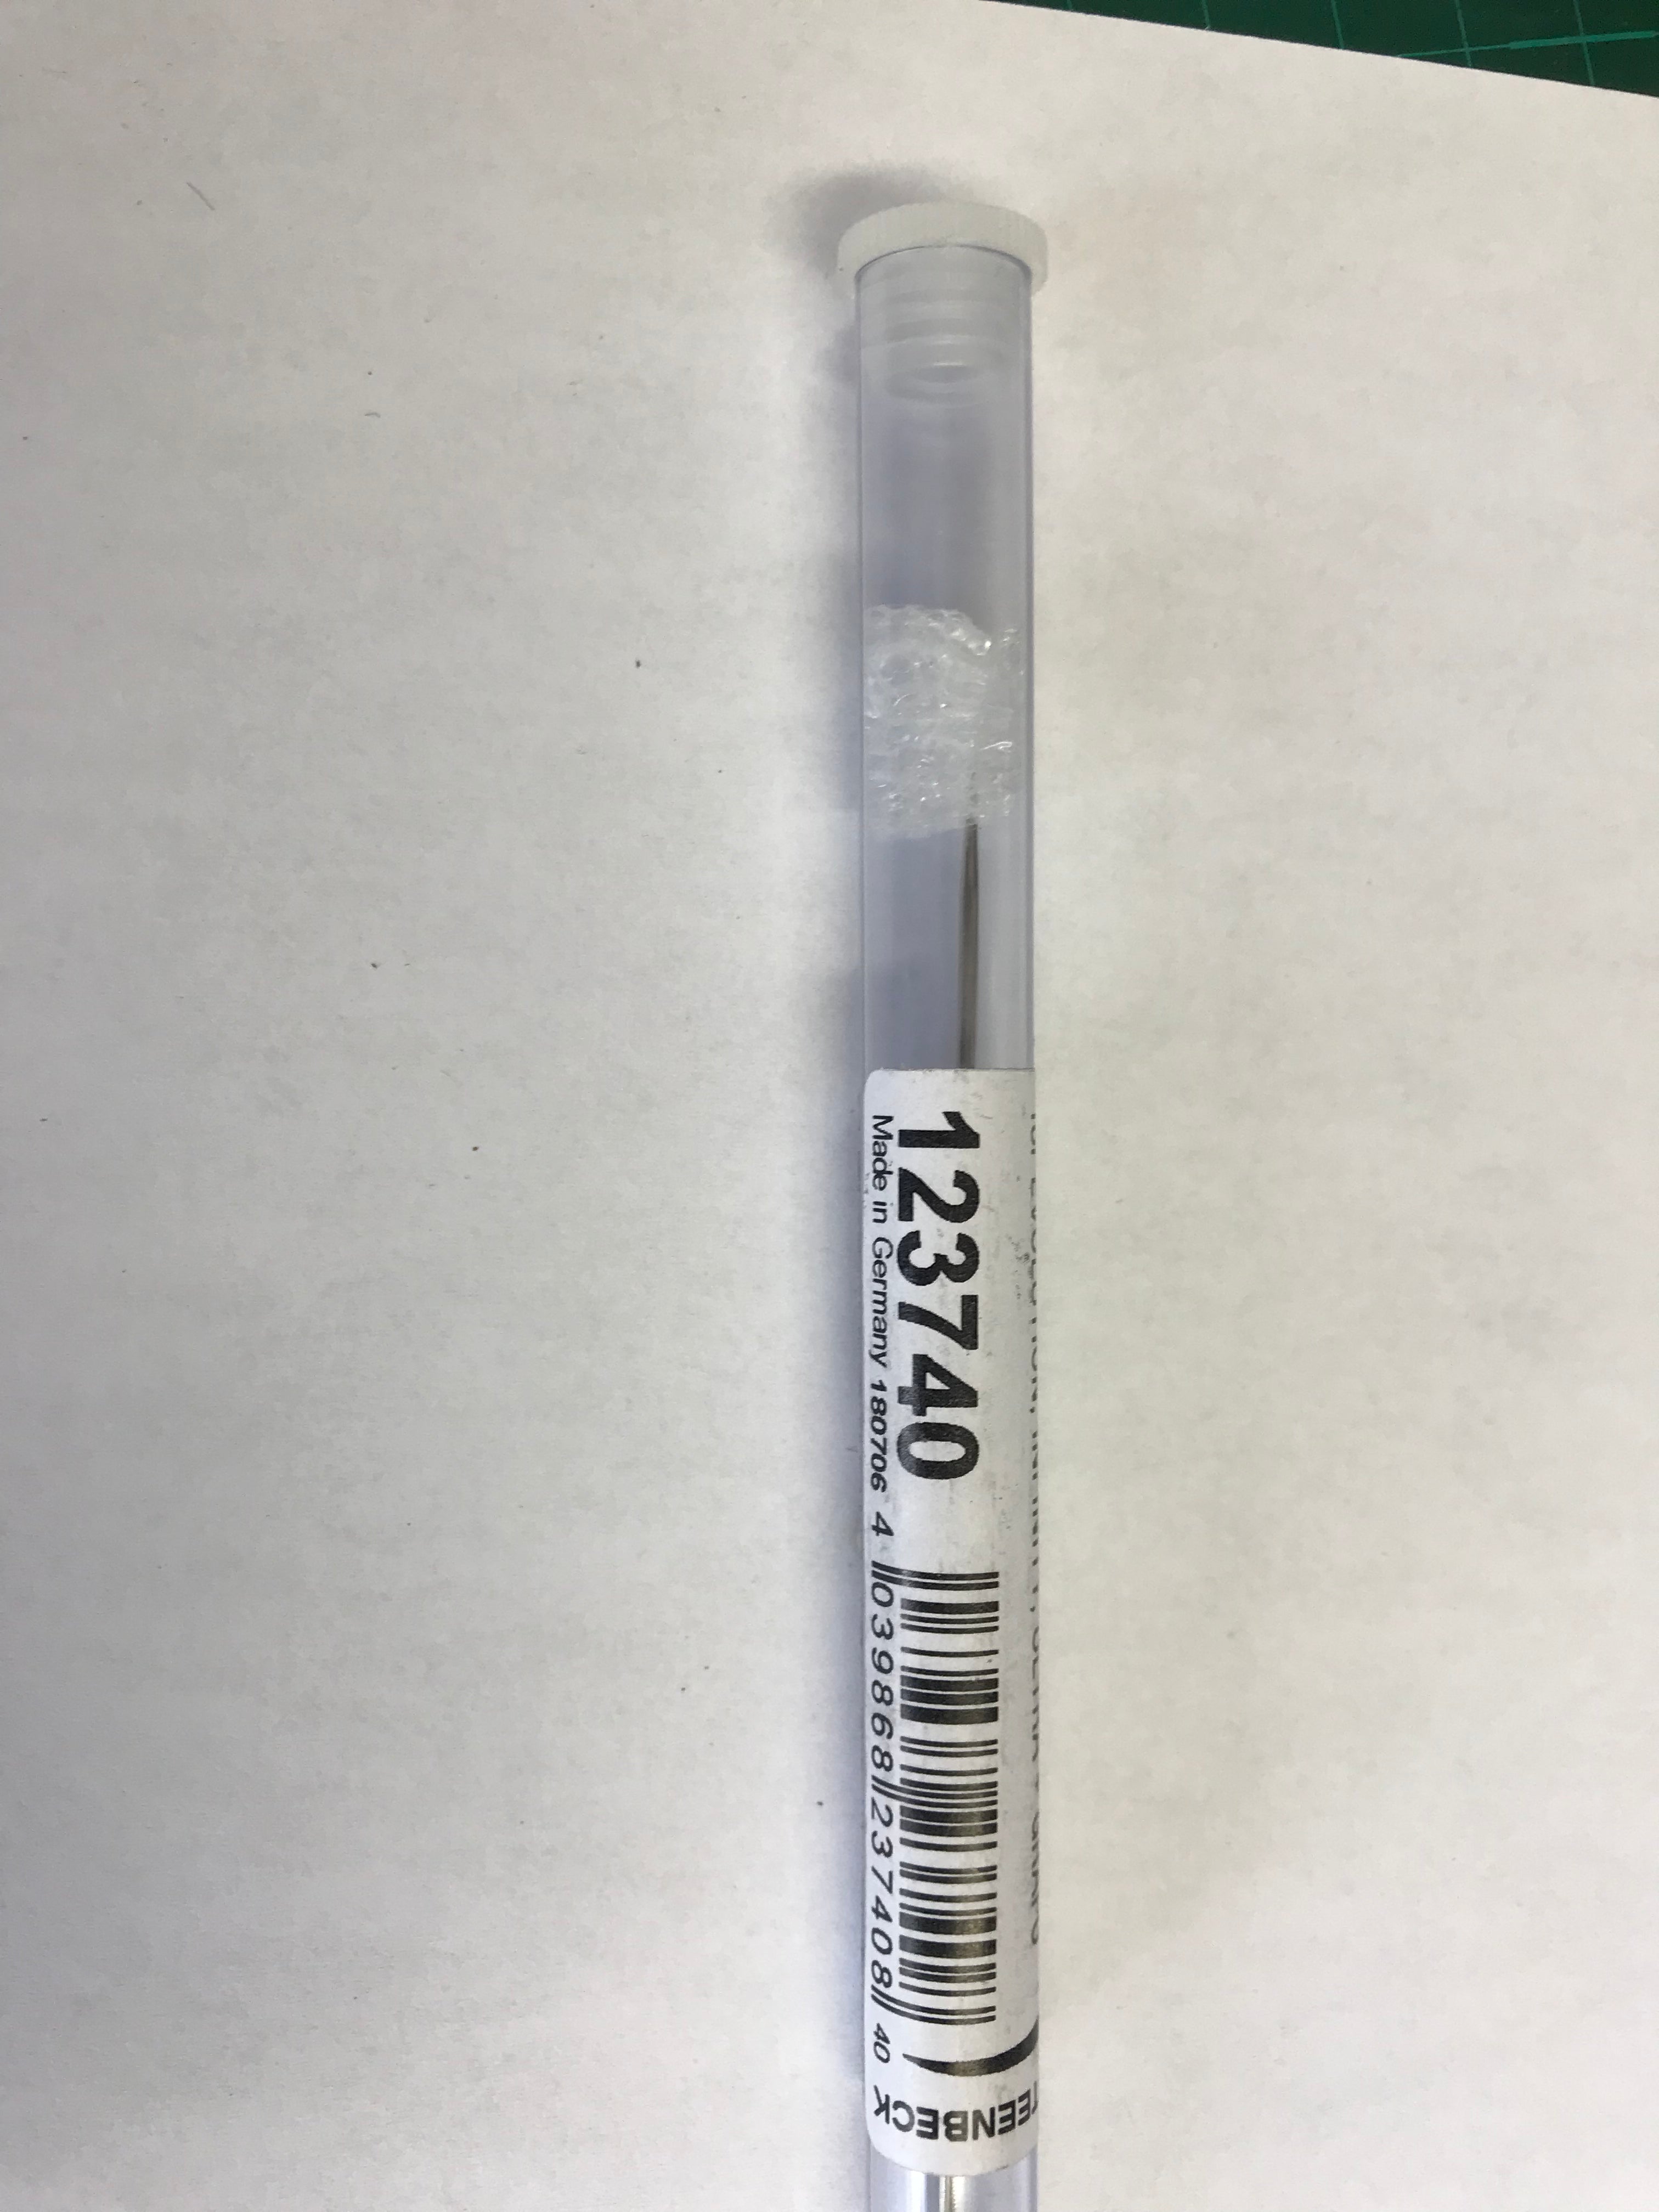 123740 Airbrush Needle 0.4 mm V2 - Harder & Steenbeck